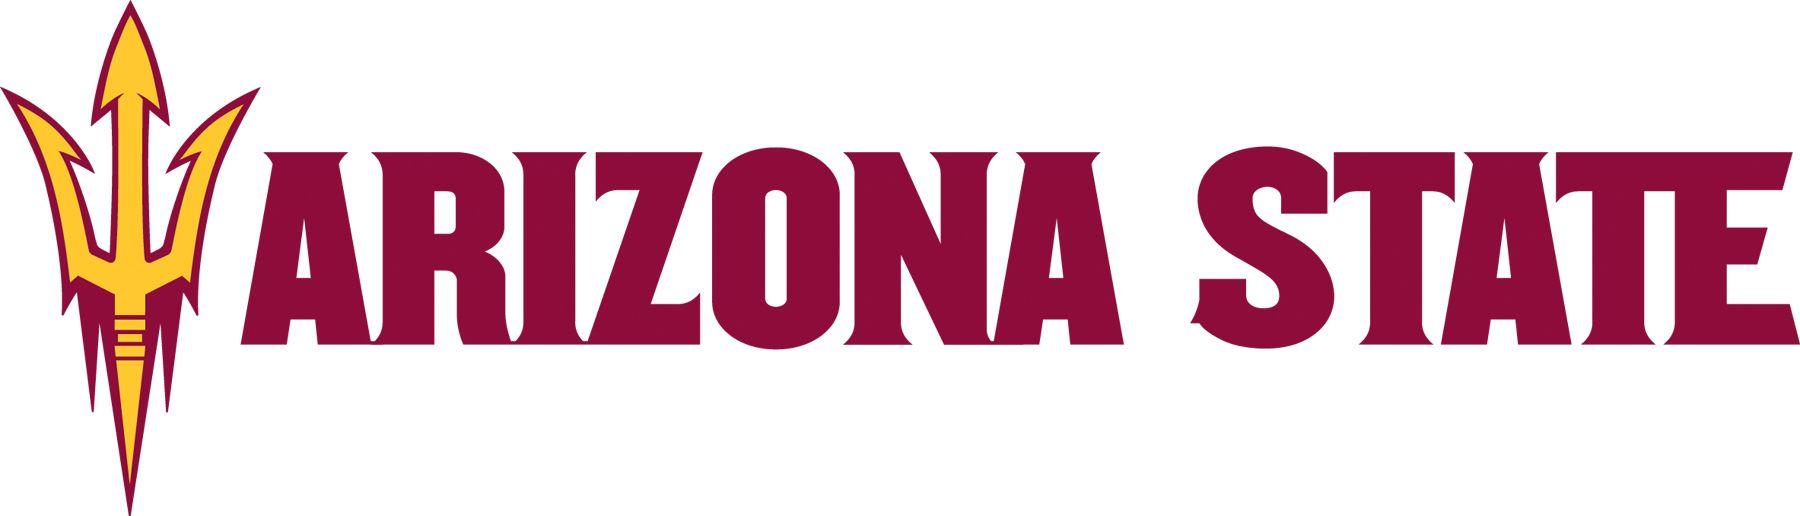 Arizona State University Logo - Arizona state university Logos